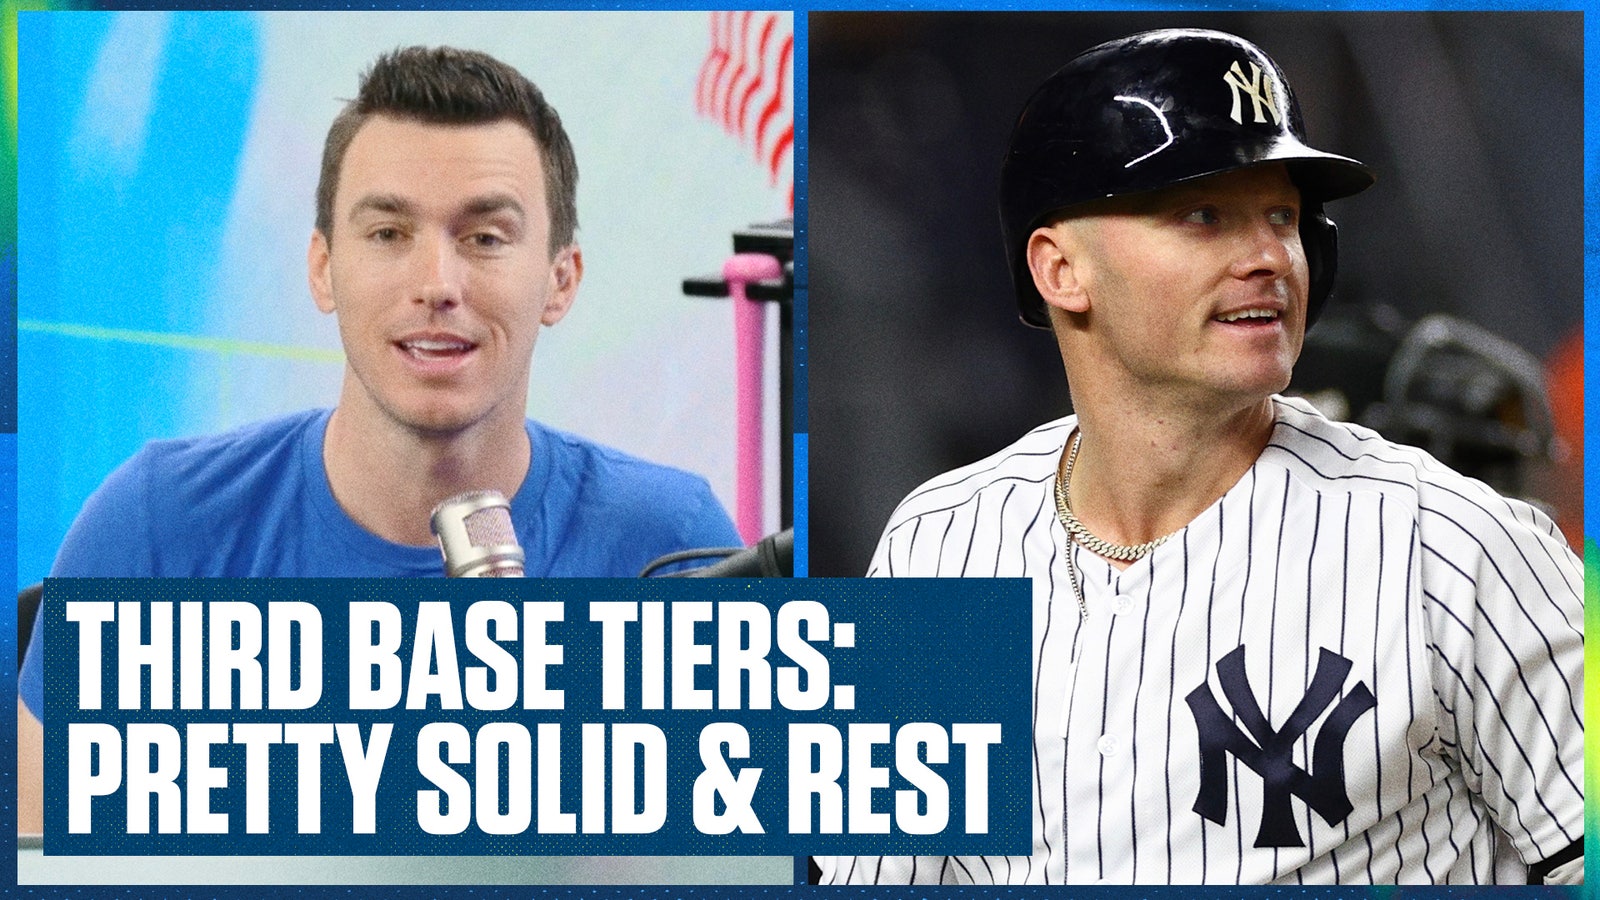 MLB Third Base: Josh Donaldson & Alec Baum Headline The Pretty Solid & The Rest